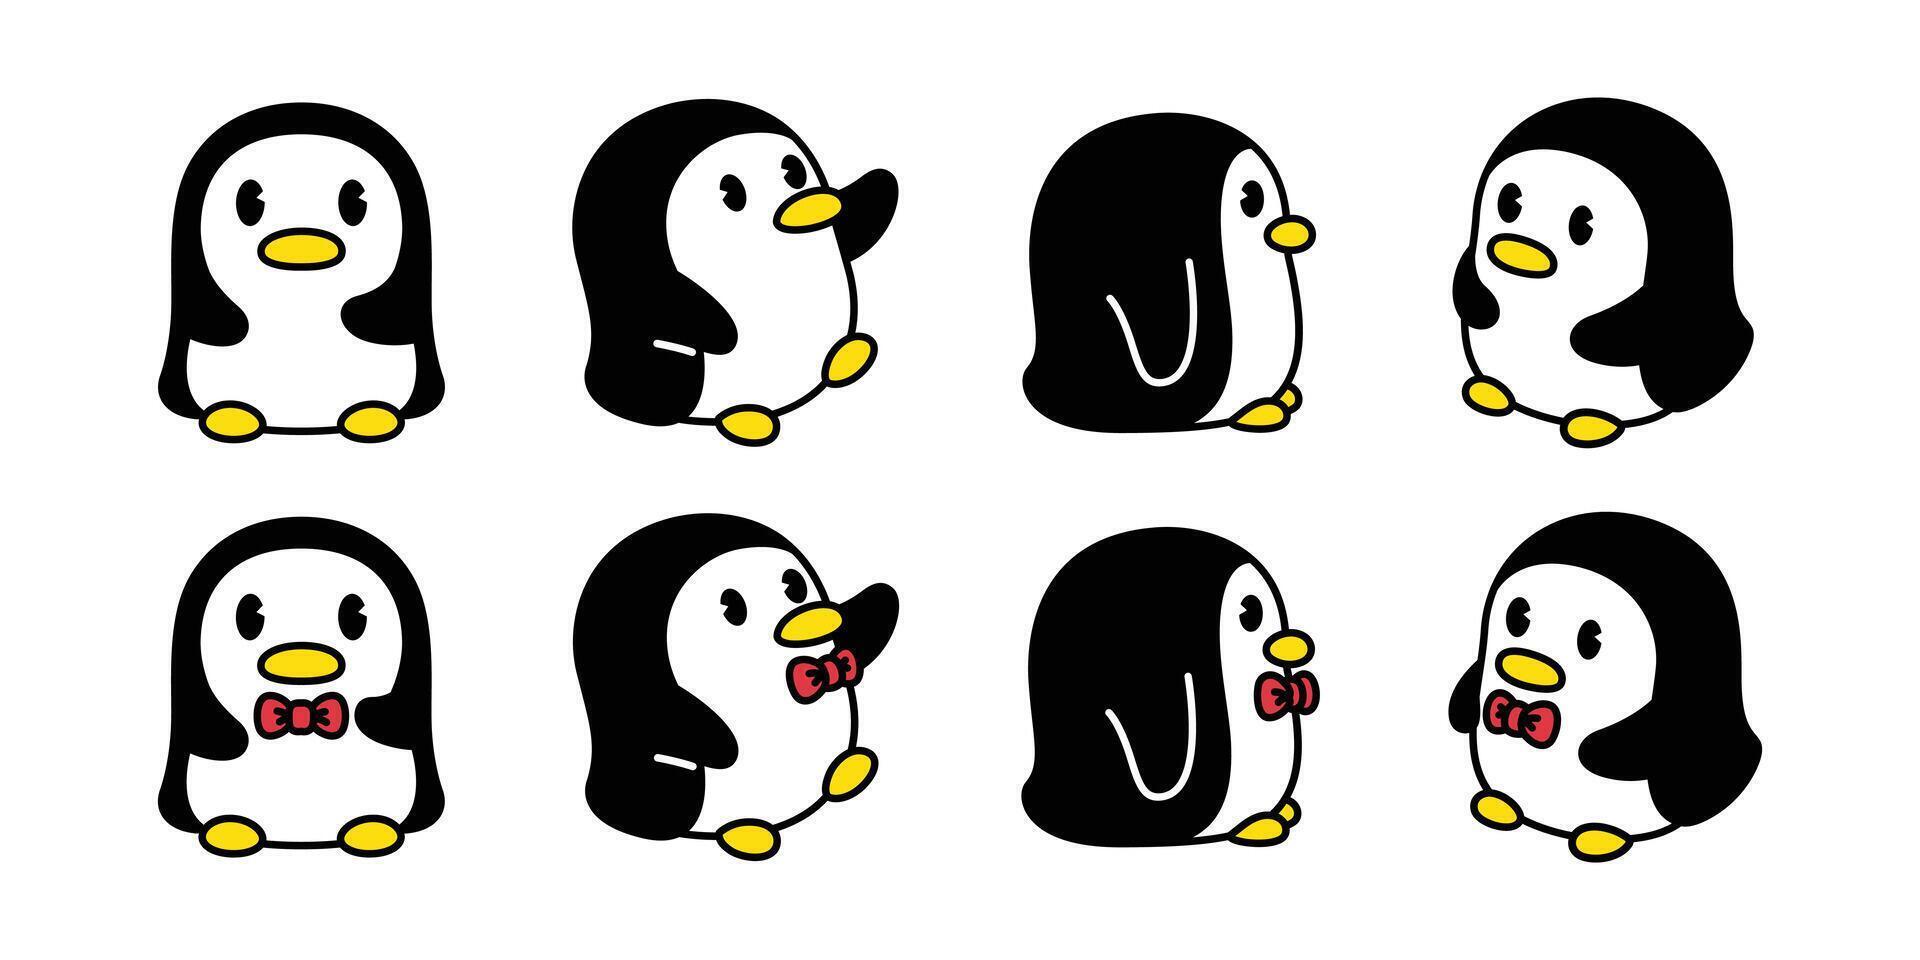 penguin vector bird icon logo cartoon character bow tie illustration symbol graphic doodle design